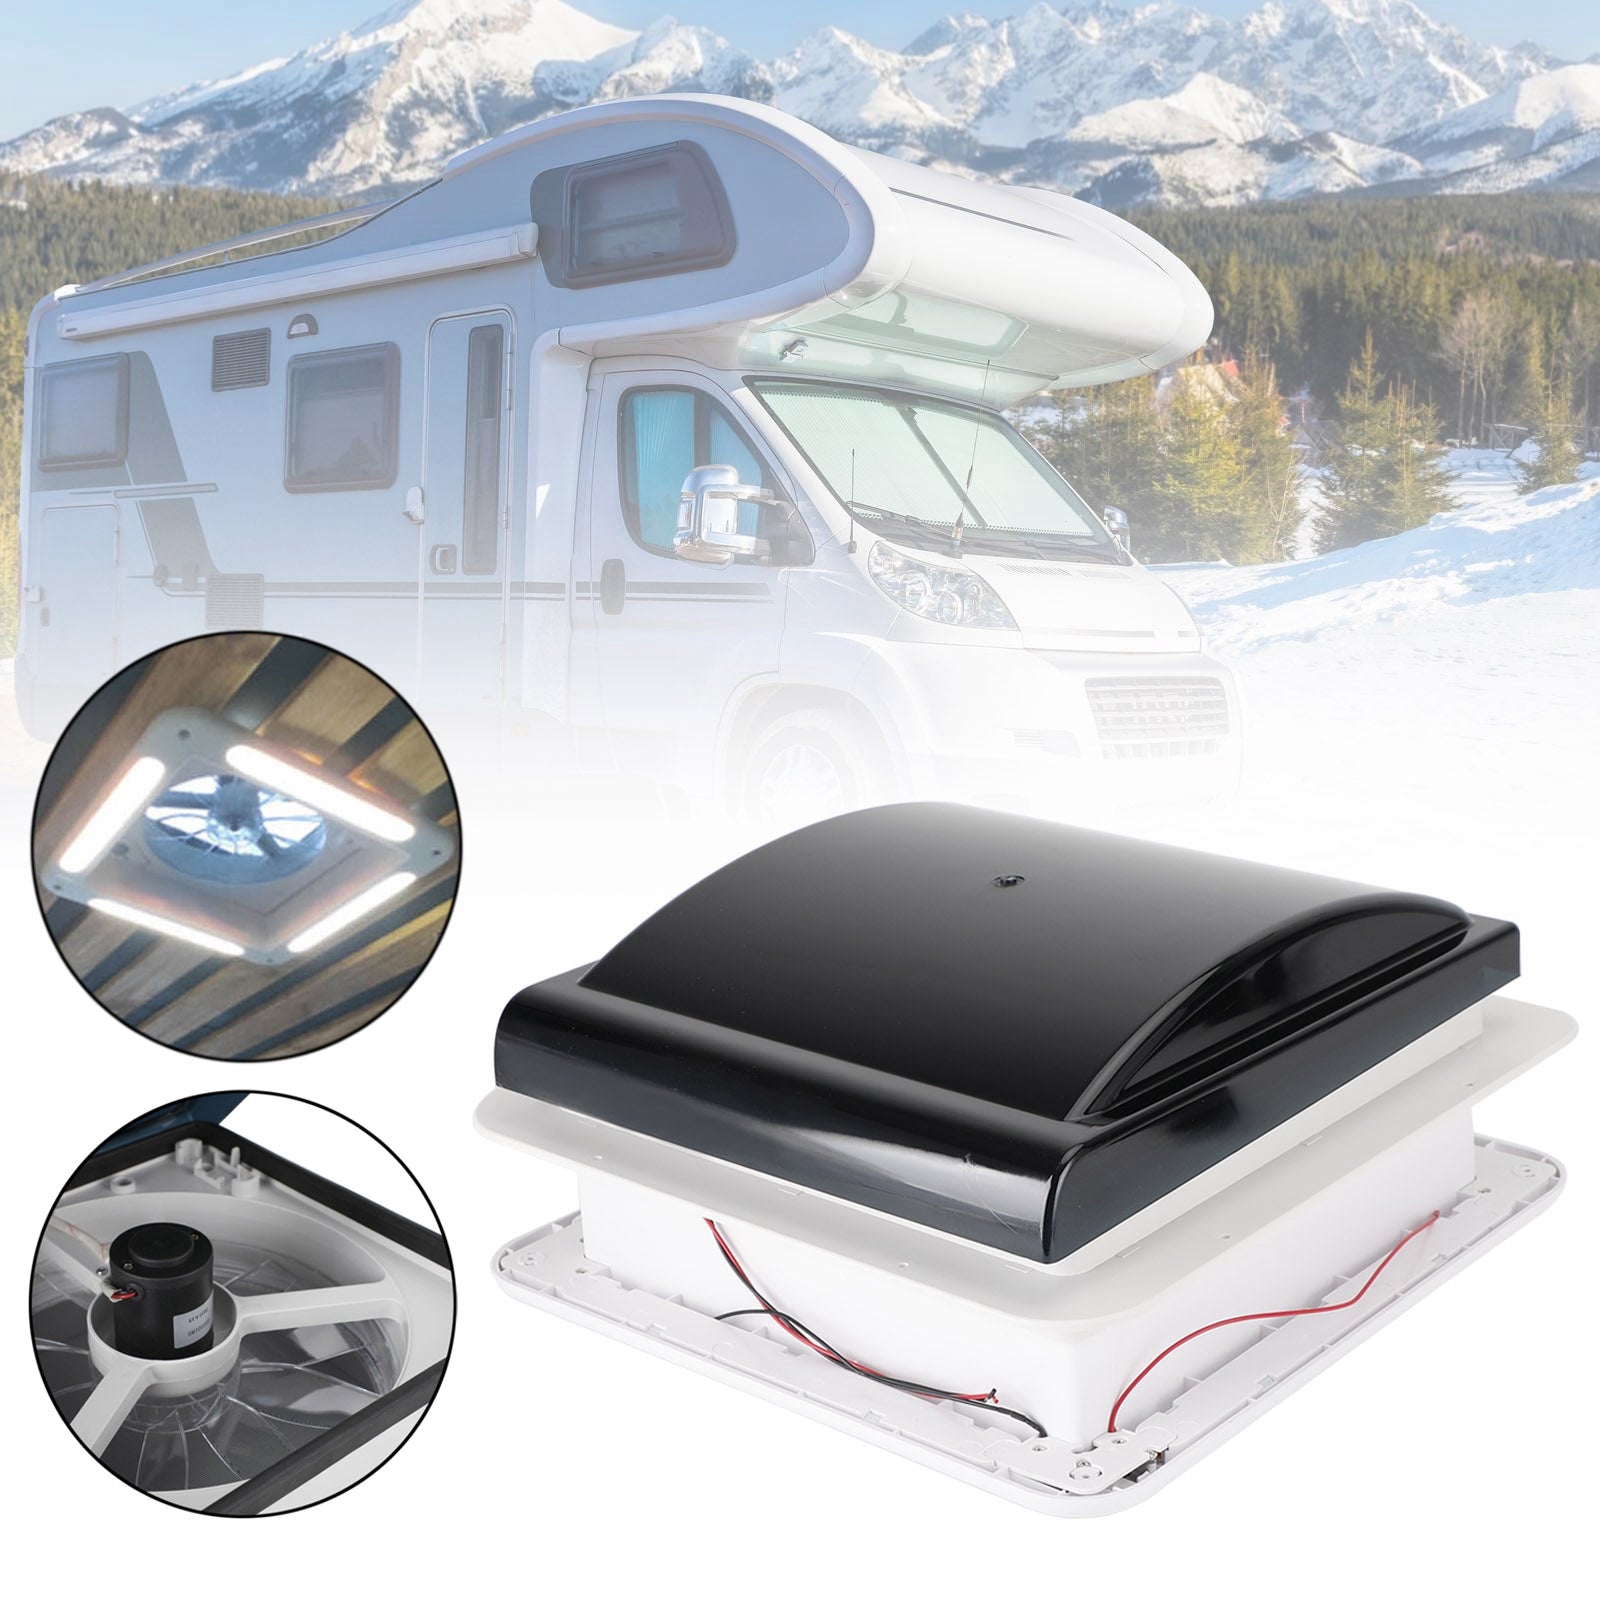 14" RV Caravan Roof Vent Manual RV Camper Fan 12V Skylight With LED Light